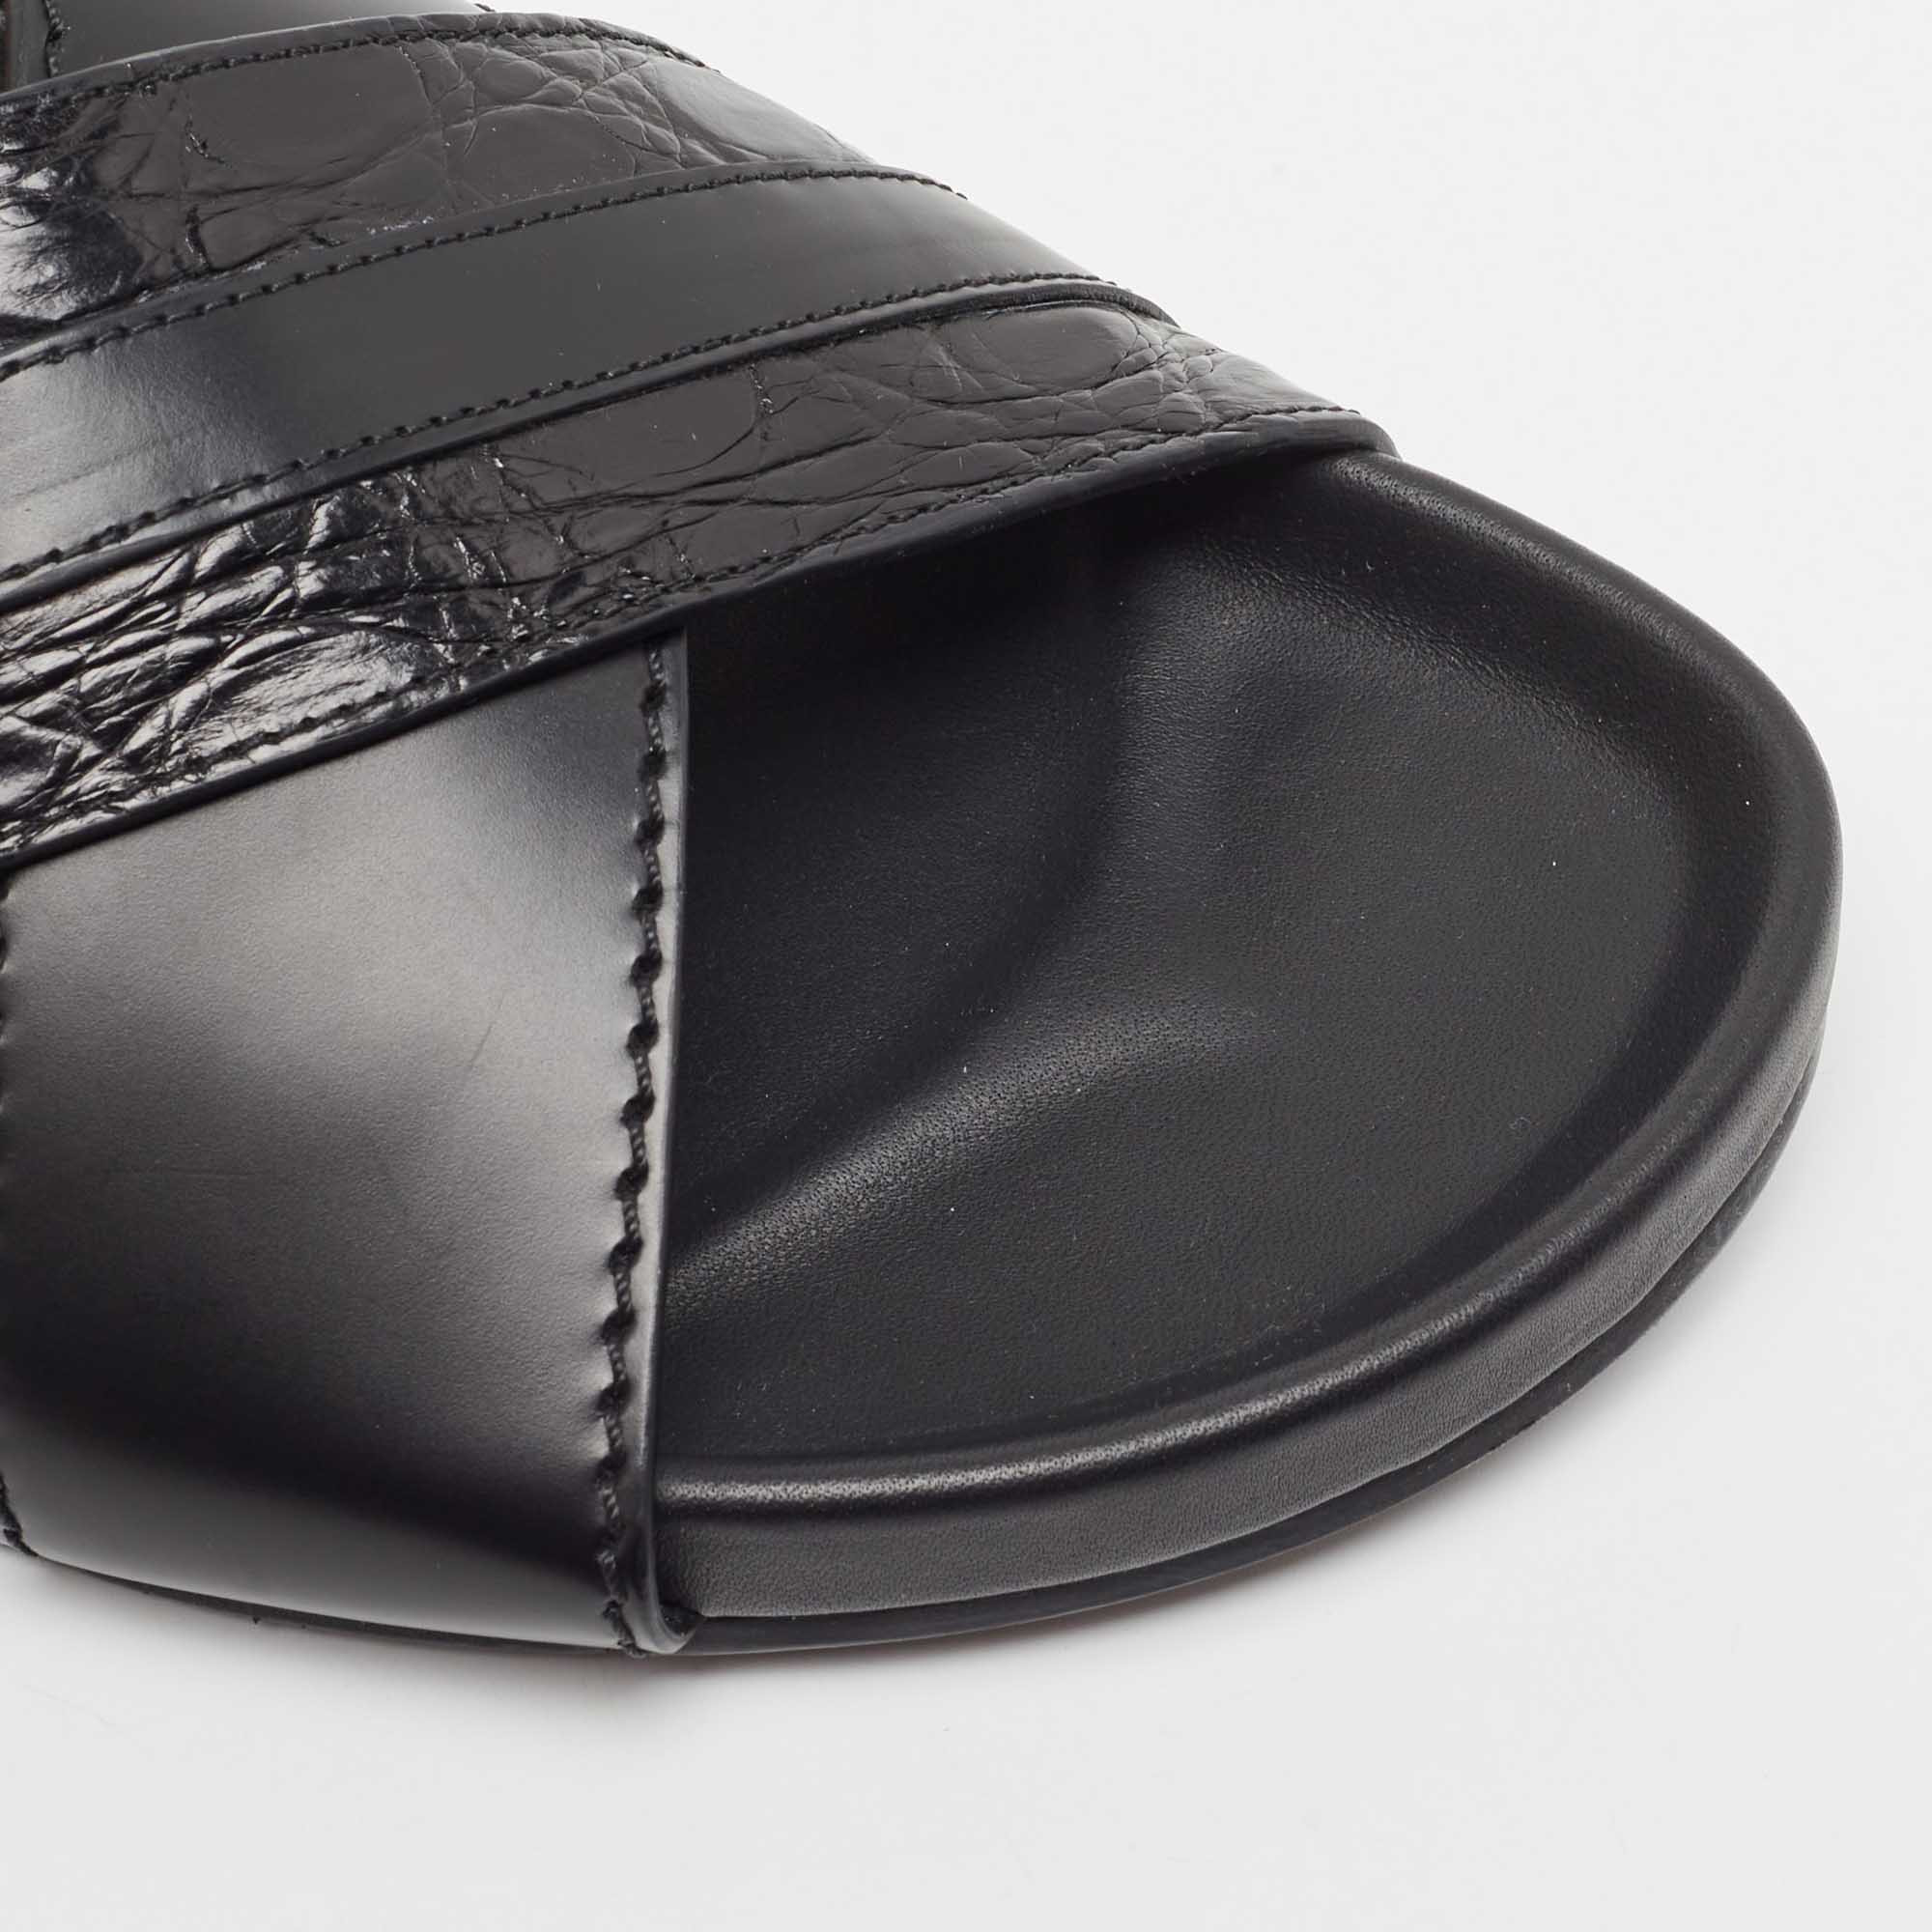 Fendi Black Crocodile And Leather Flat Slides Size 41